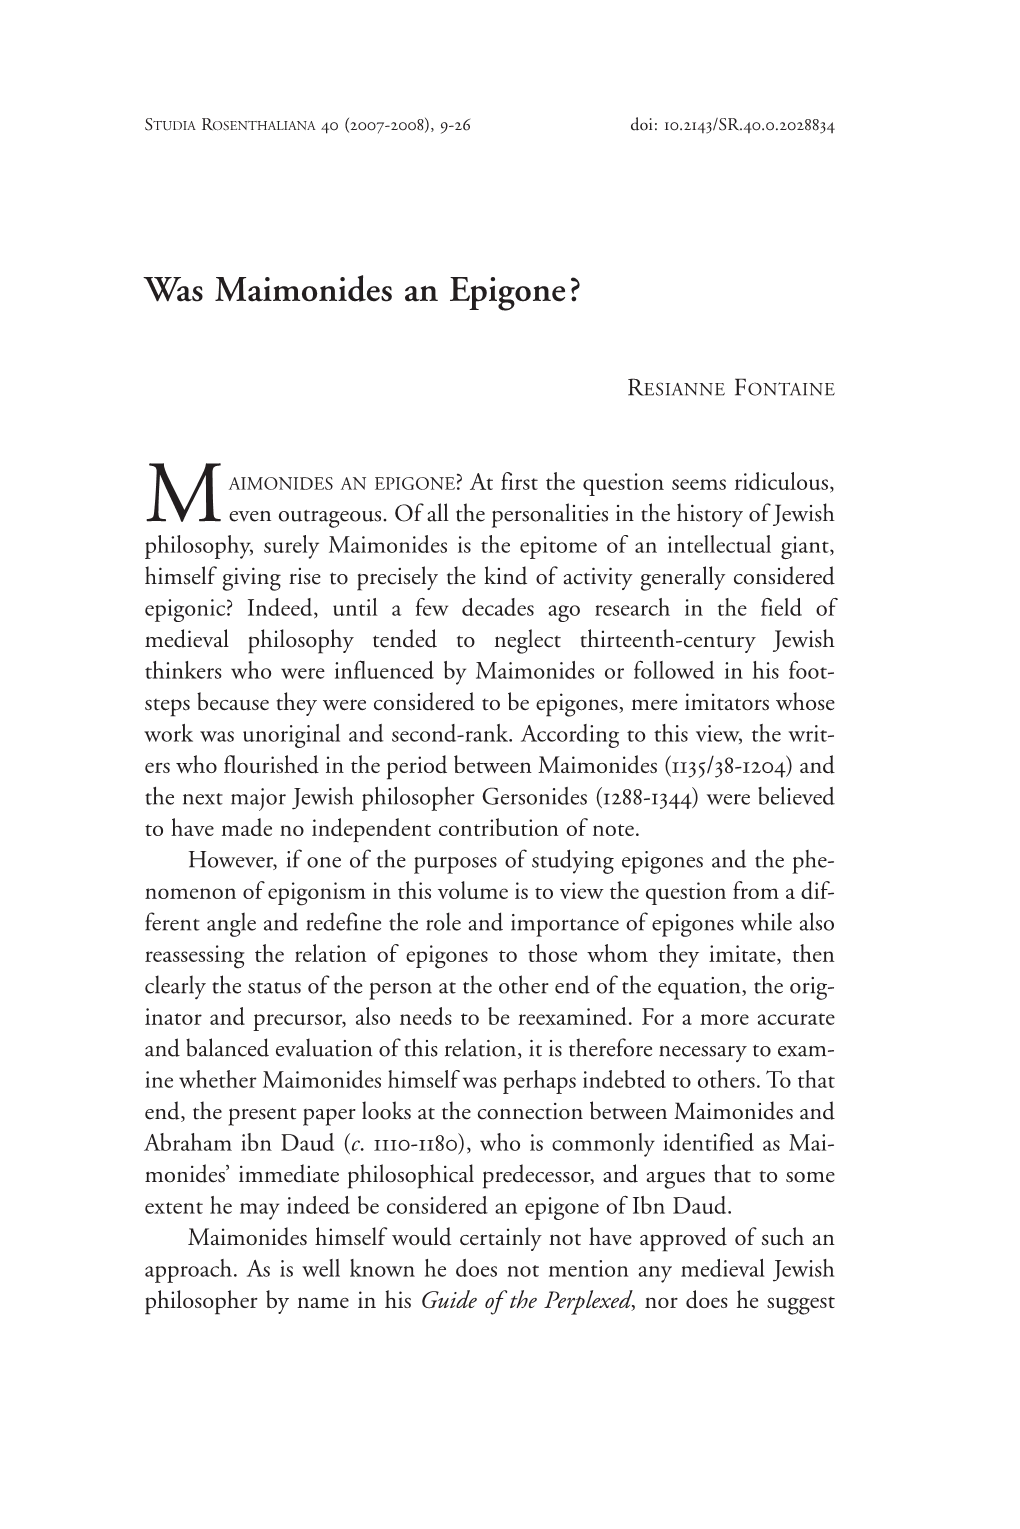 Was Maimonides an Epigone?